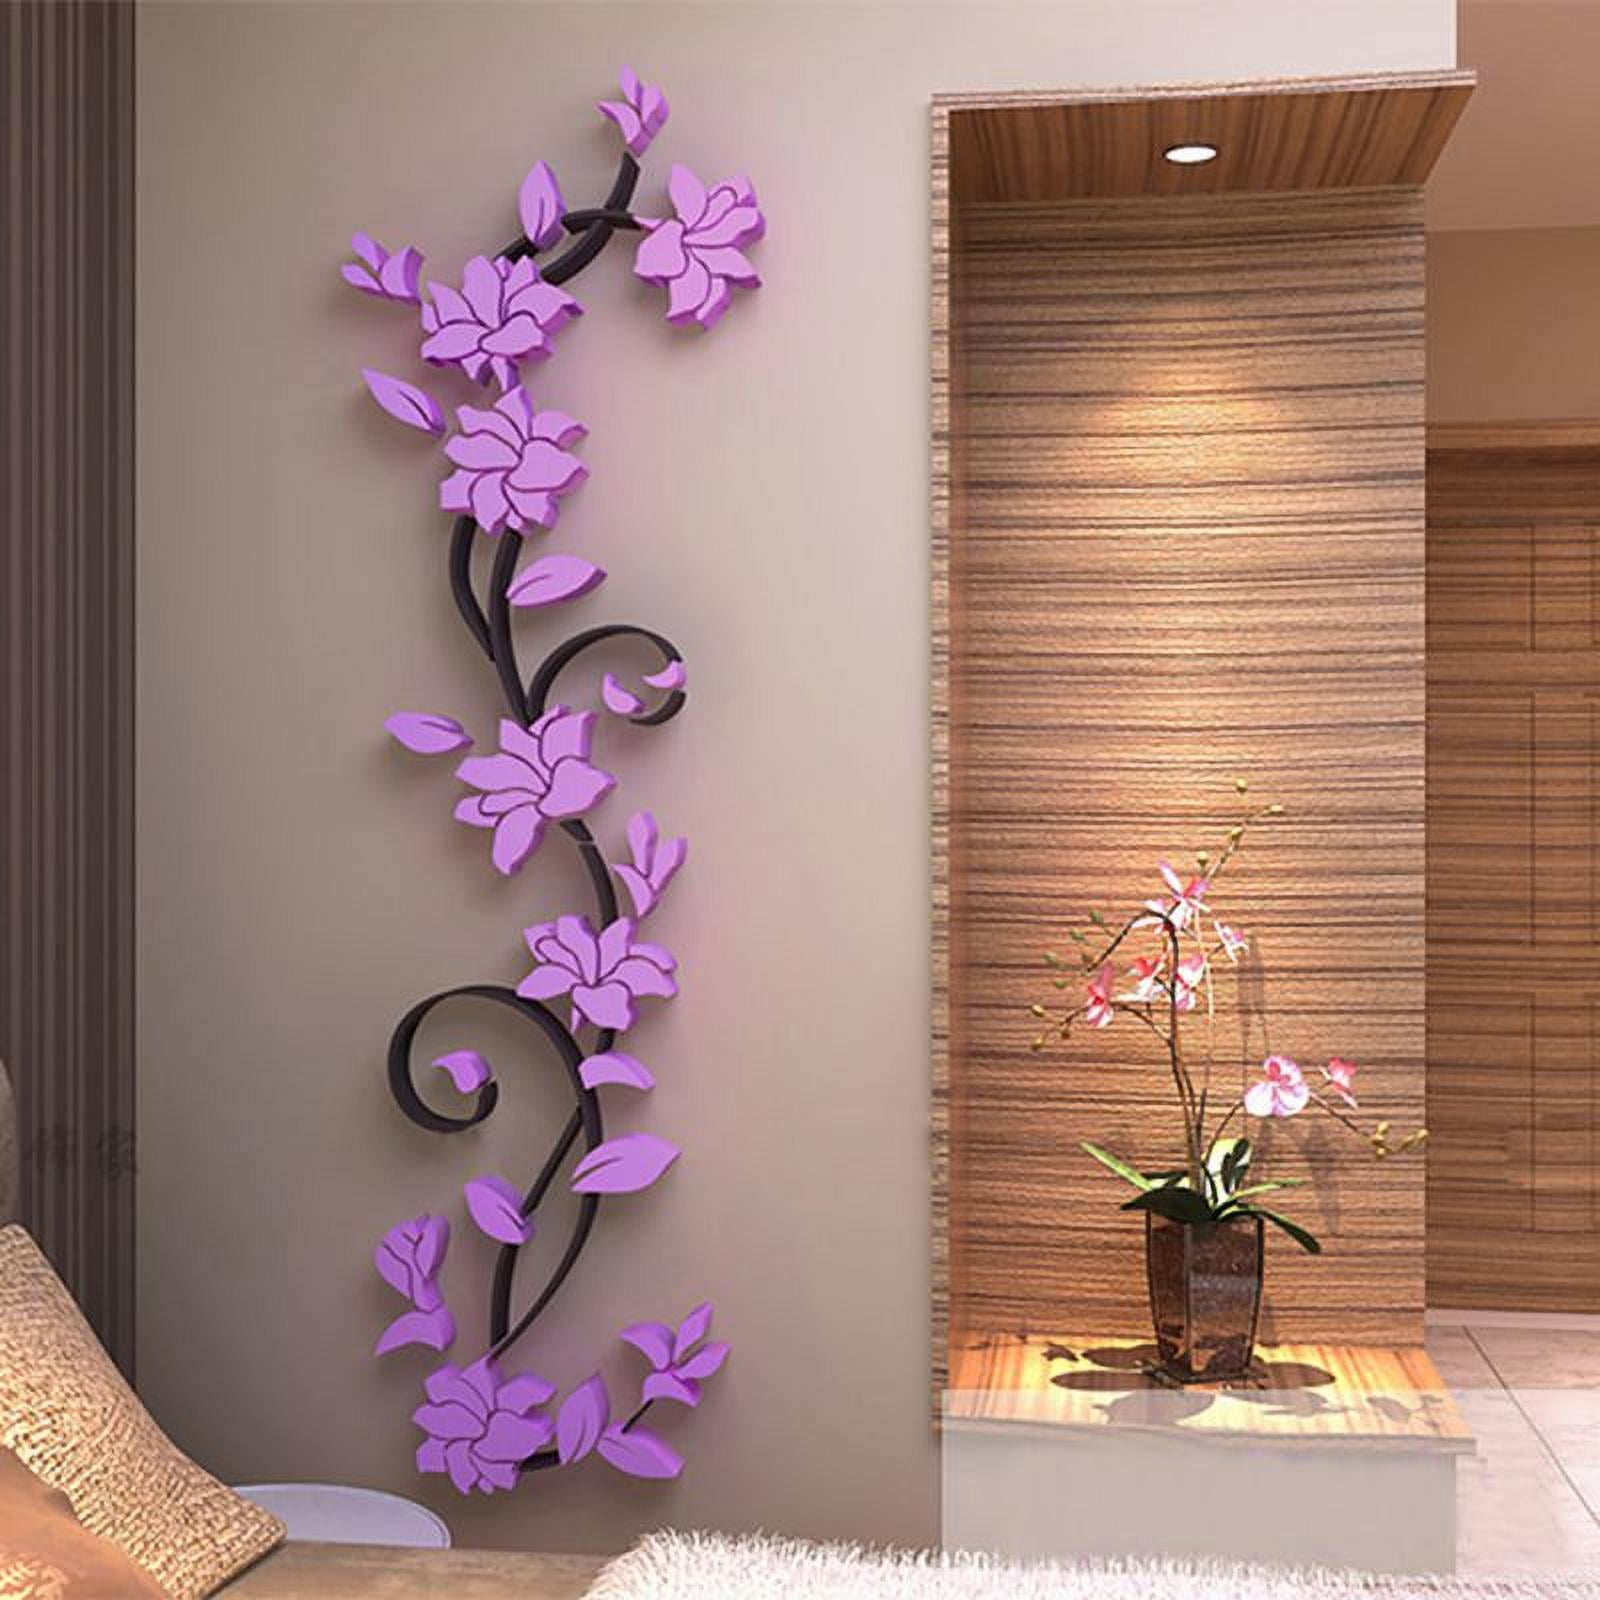 DIY Tree Flower Rattan Art Decal Refrigerator Sticker Wall Stickers Home Decor 